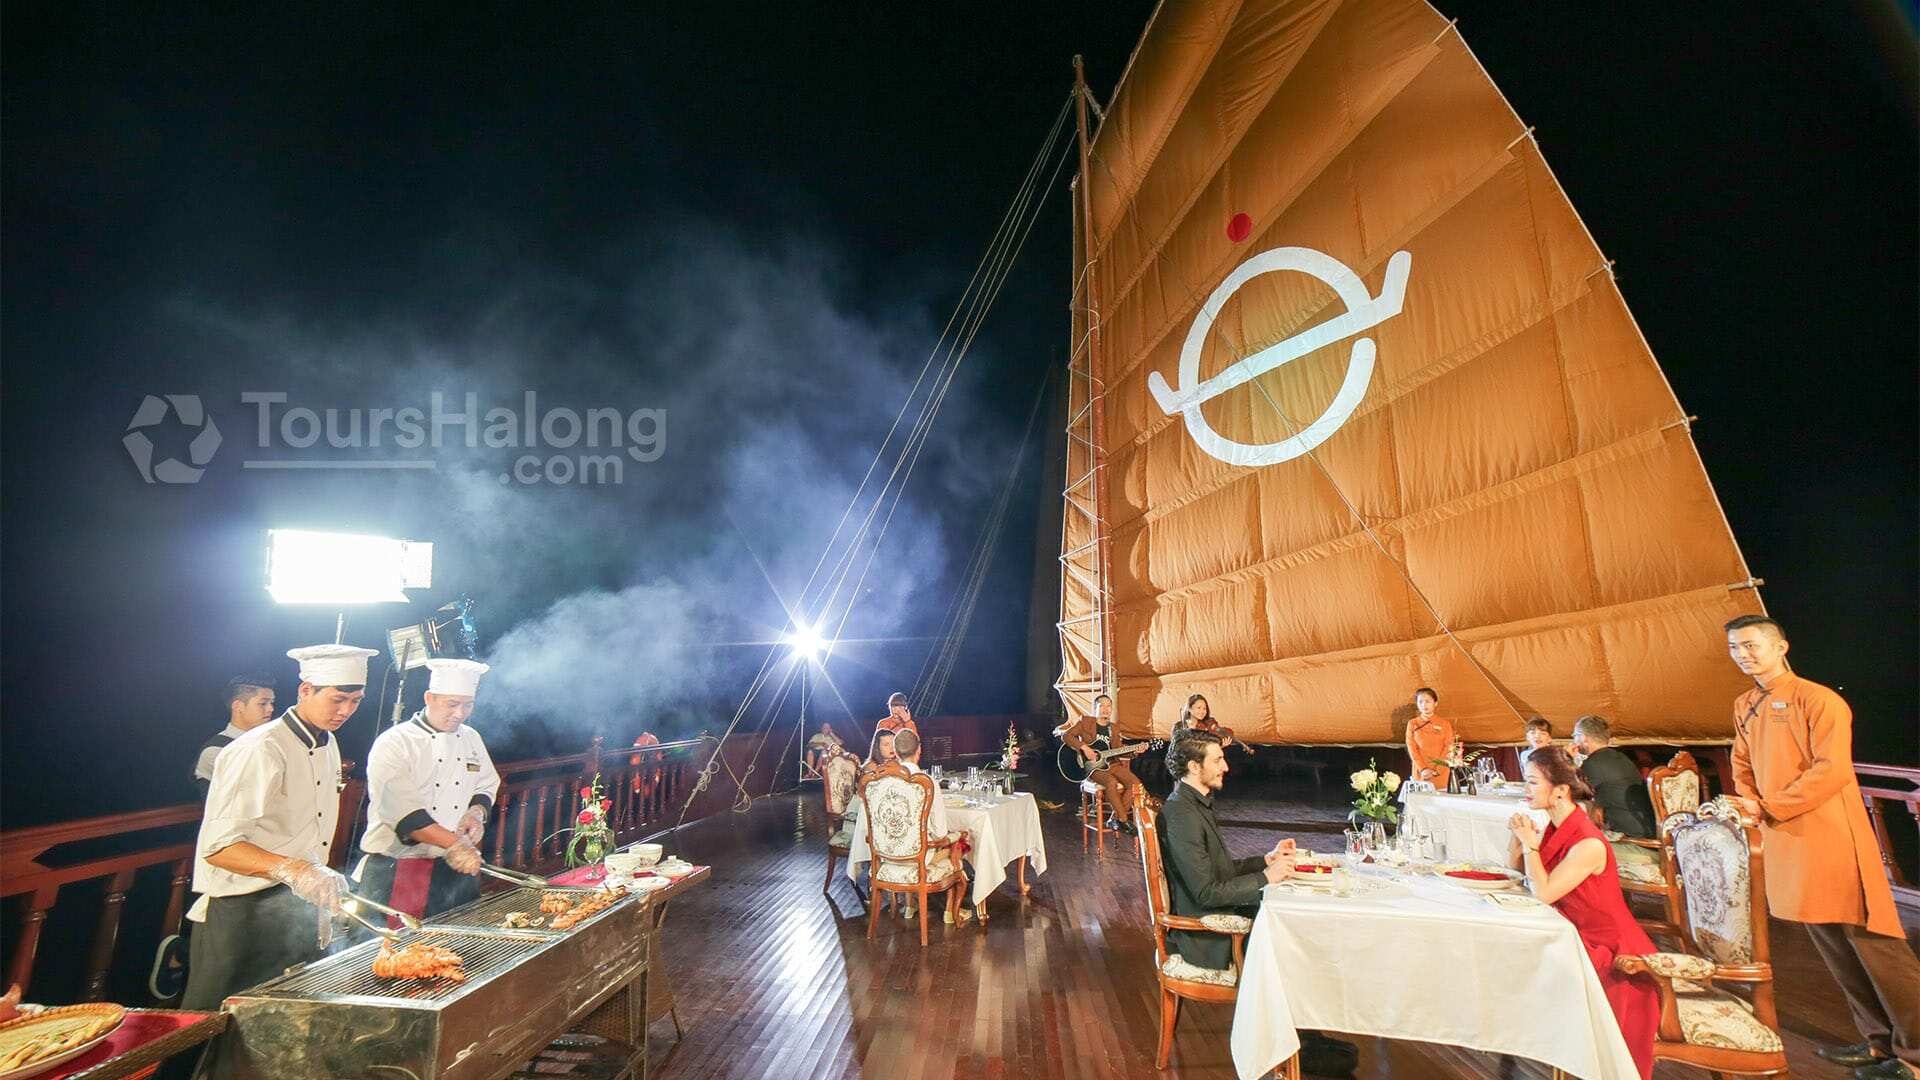 Emperor Cruises Halong Bay 3 Days 2 Nights